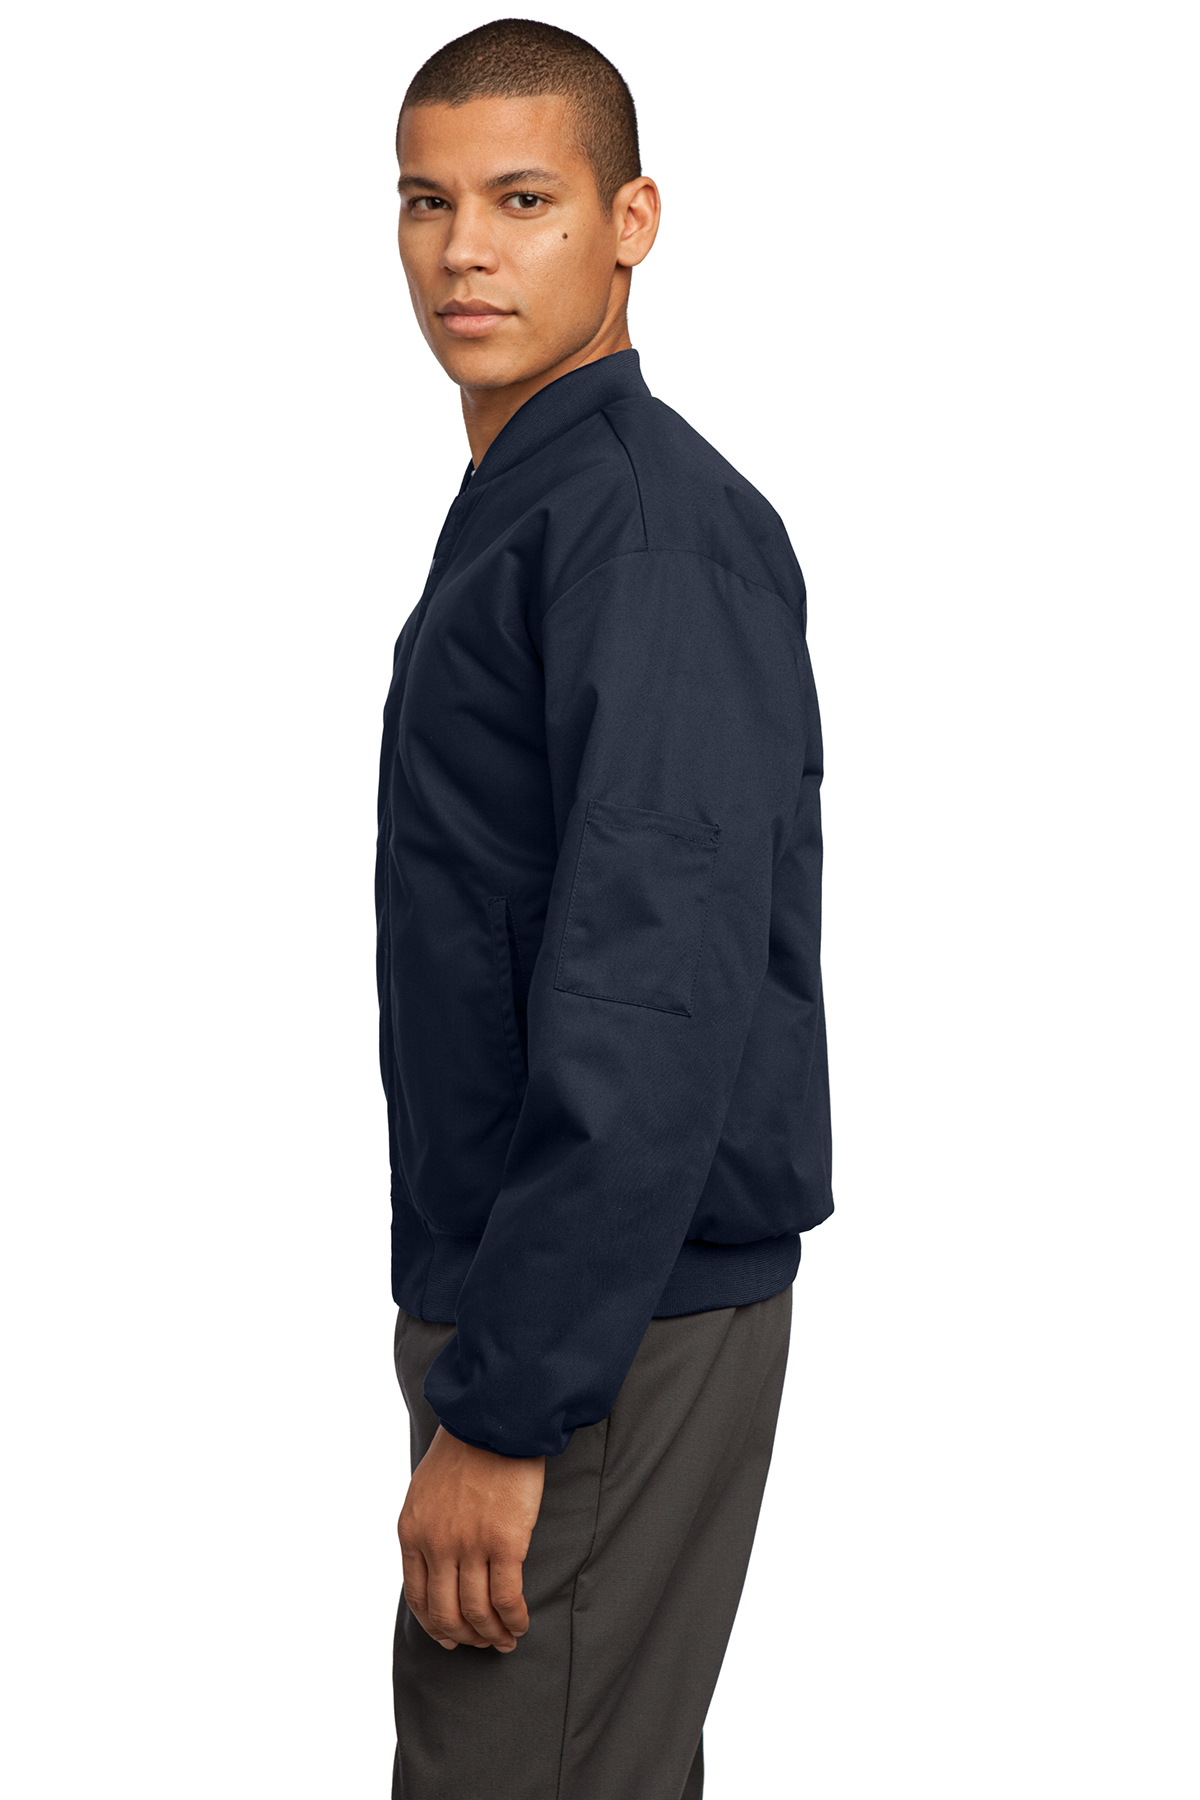 Red Kap Team Style Jacket with Slash Pockets | Product | SanMar